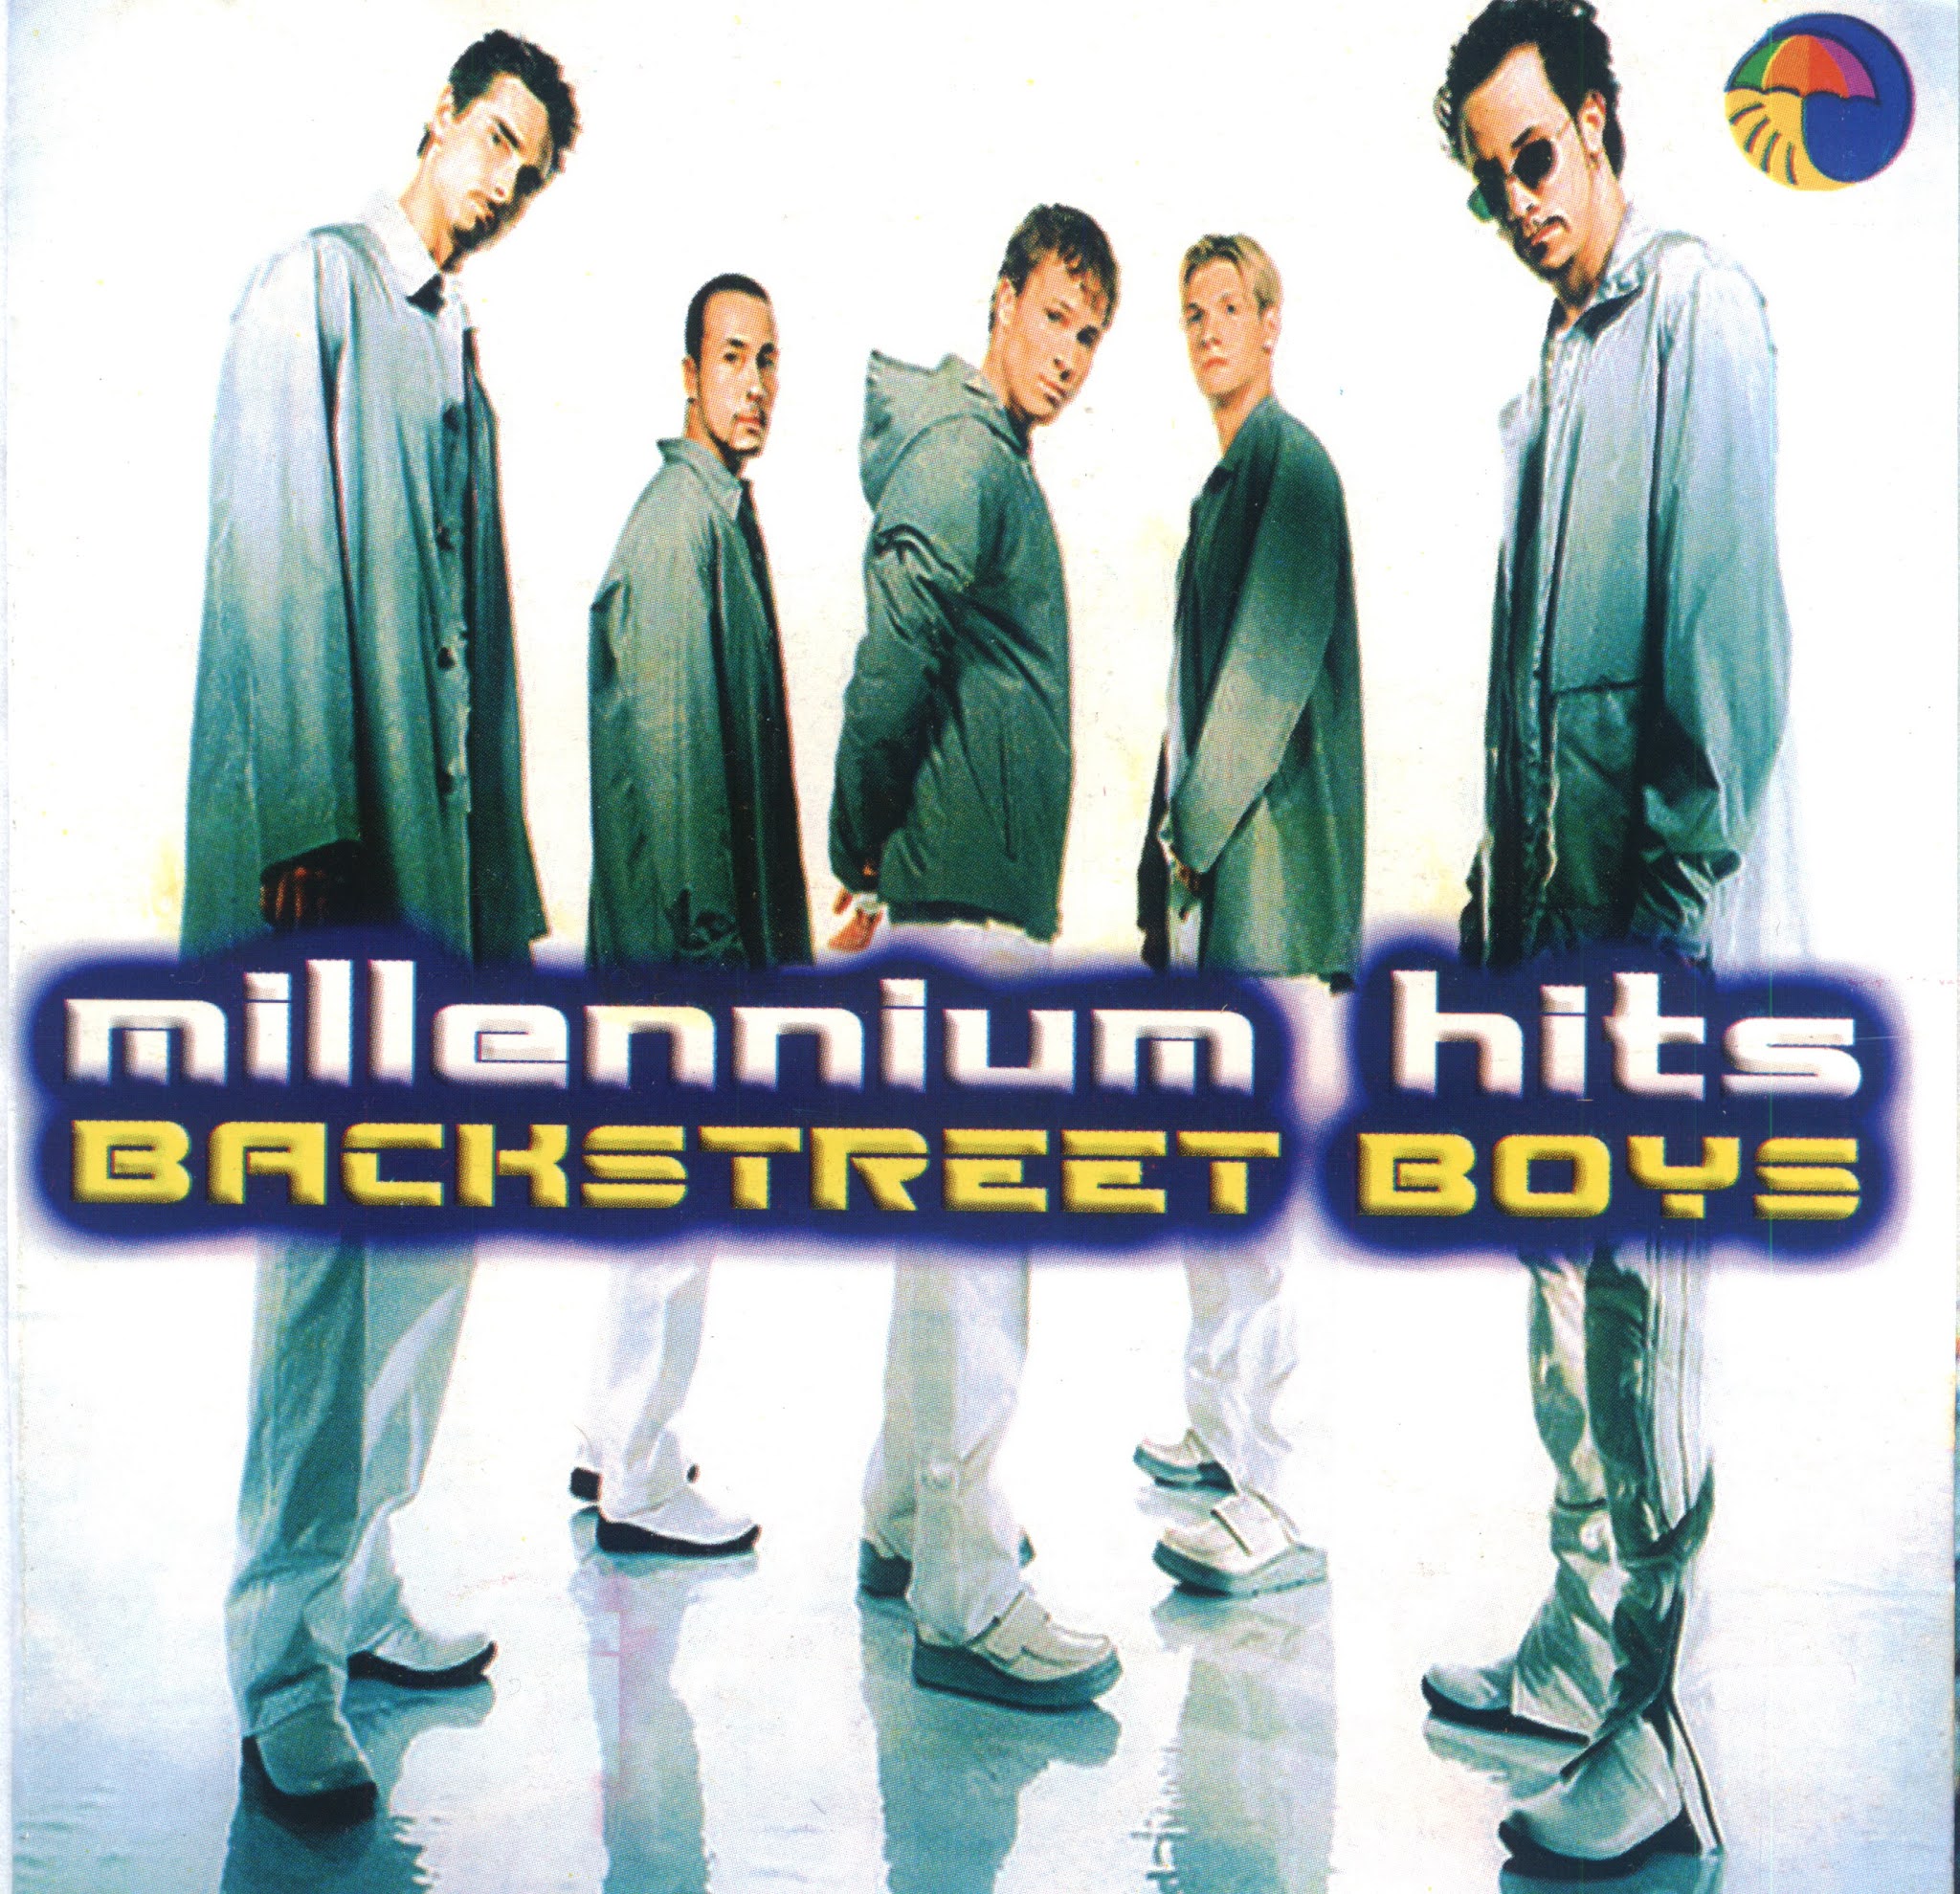 Boys мп3. Миллениум 1999 Backstreet boys. Backstreet boys Millennium альбом. Backstreet boys обложка. Millennium Backstreet boys обложка.